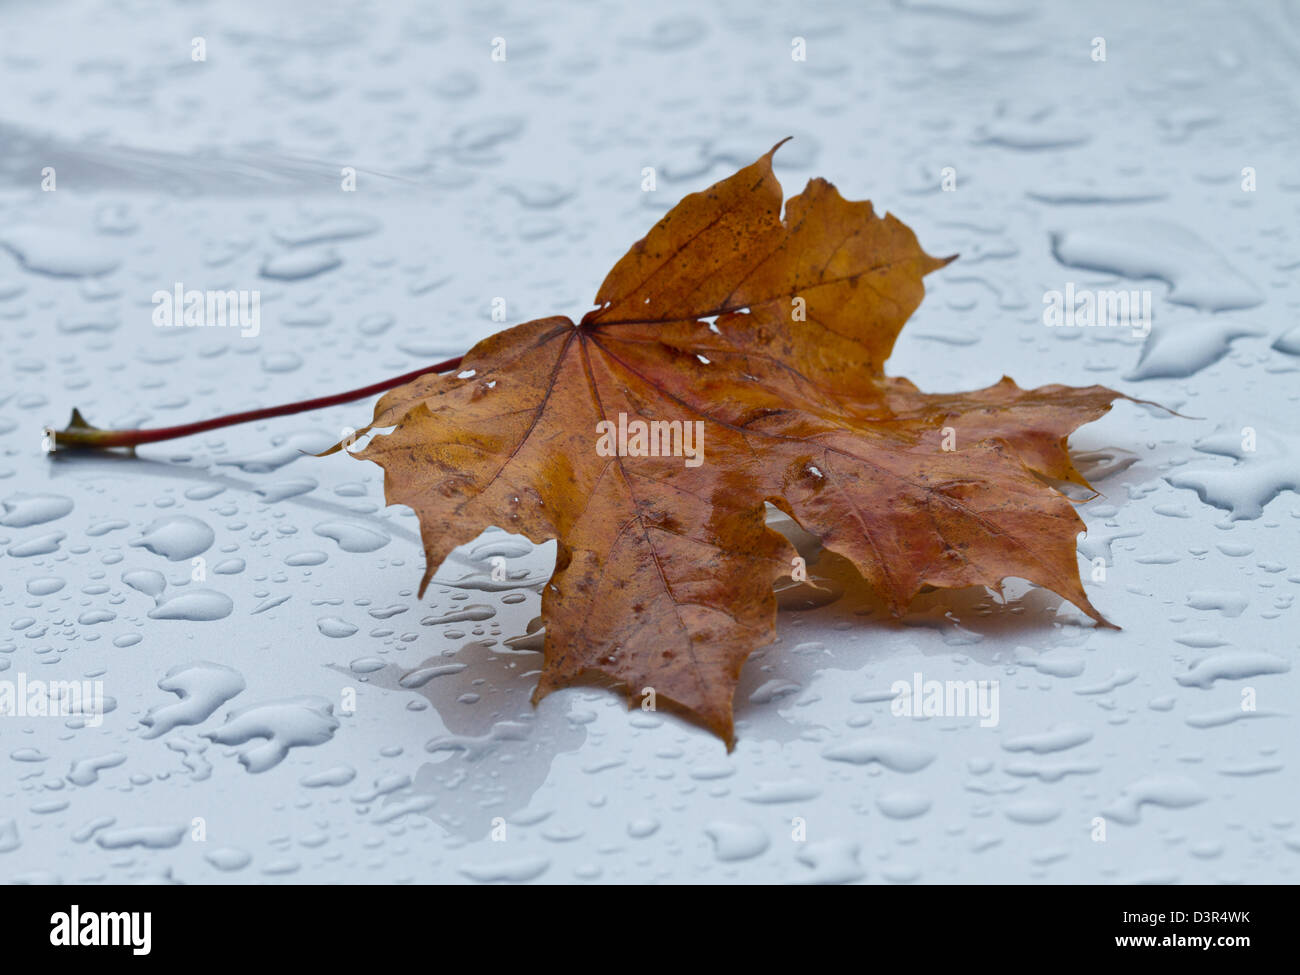 Autumn leaf on silver car in rain Stock Photo